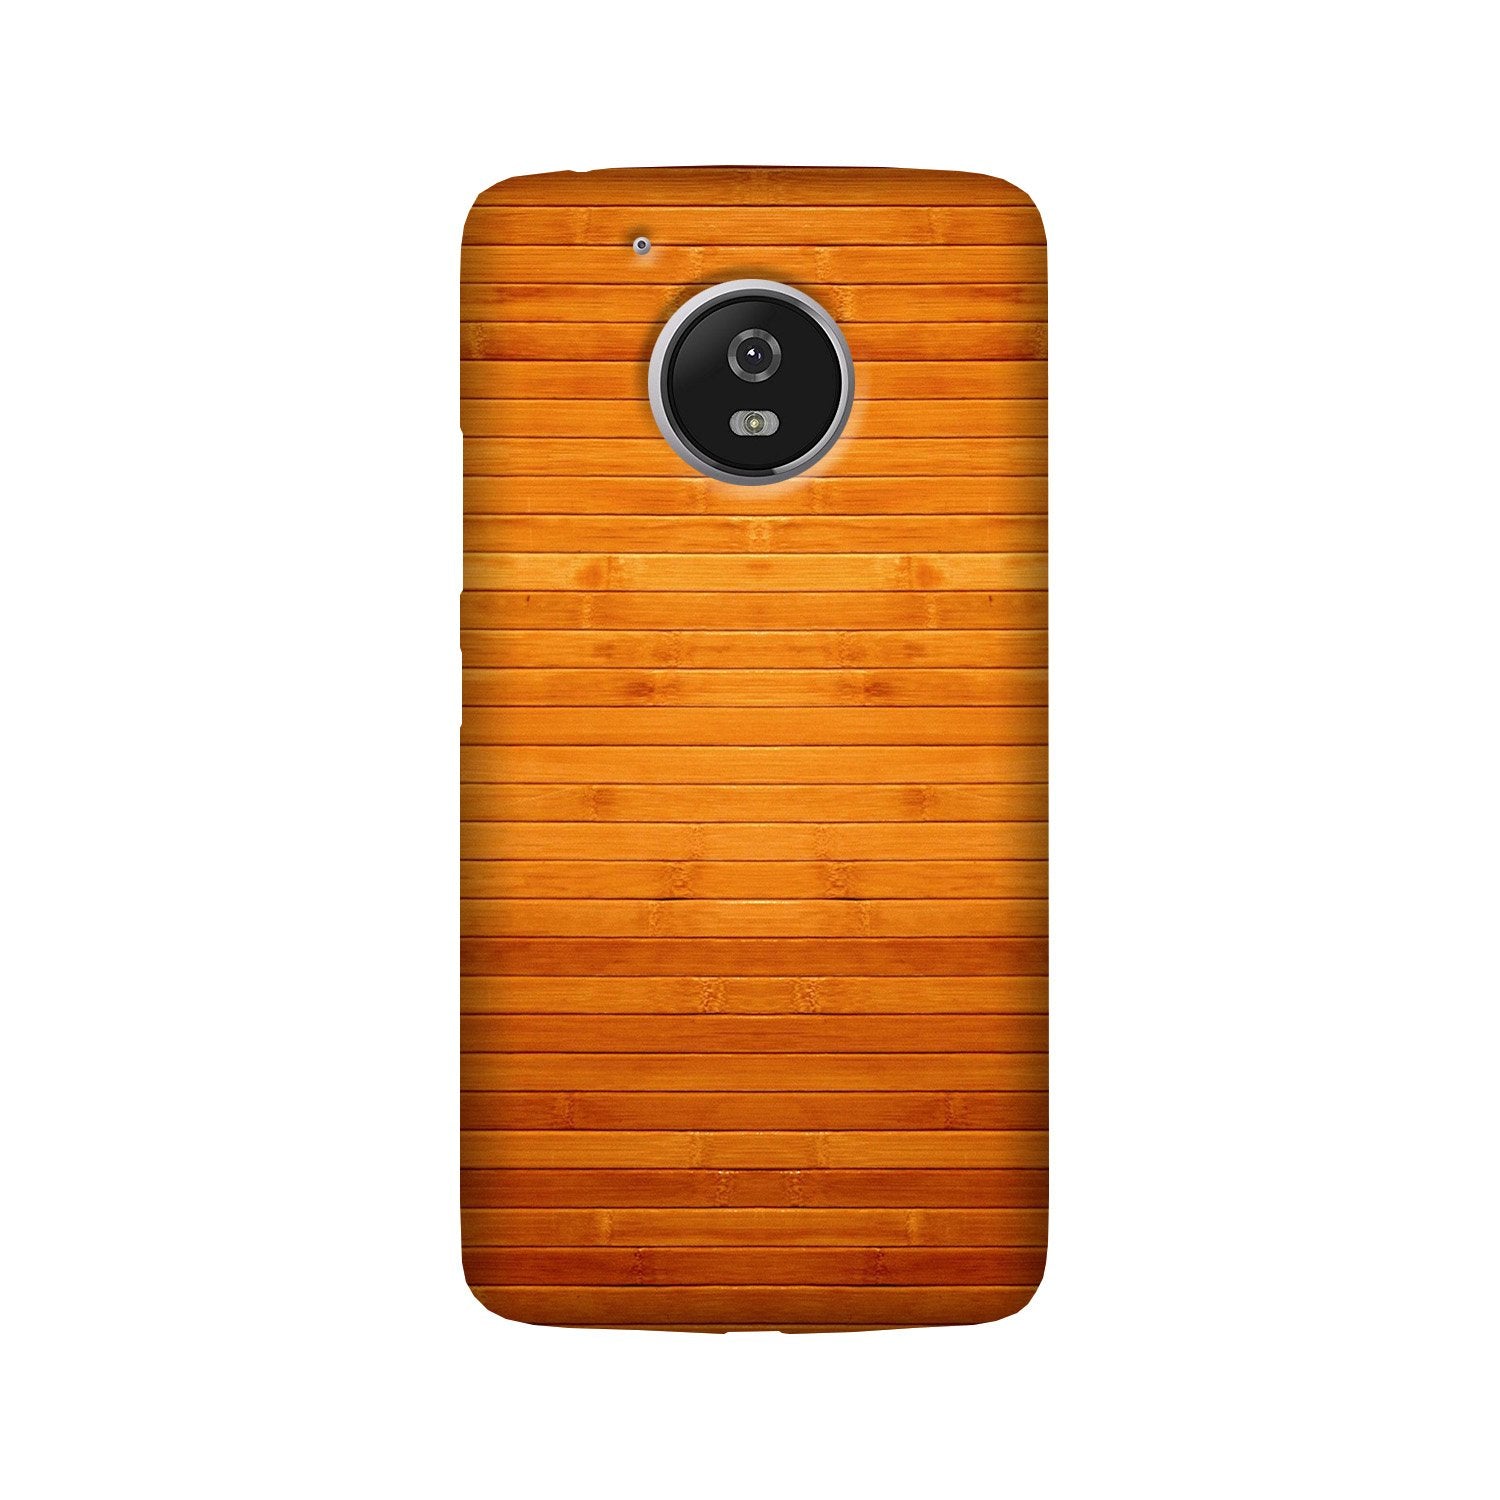 Wooden Look Case for Moto G5 Plus  (Design - 111)